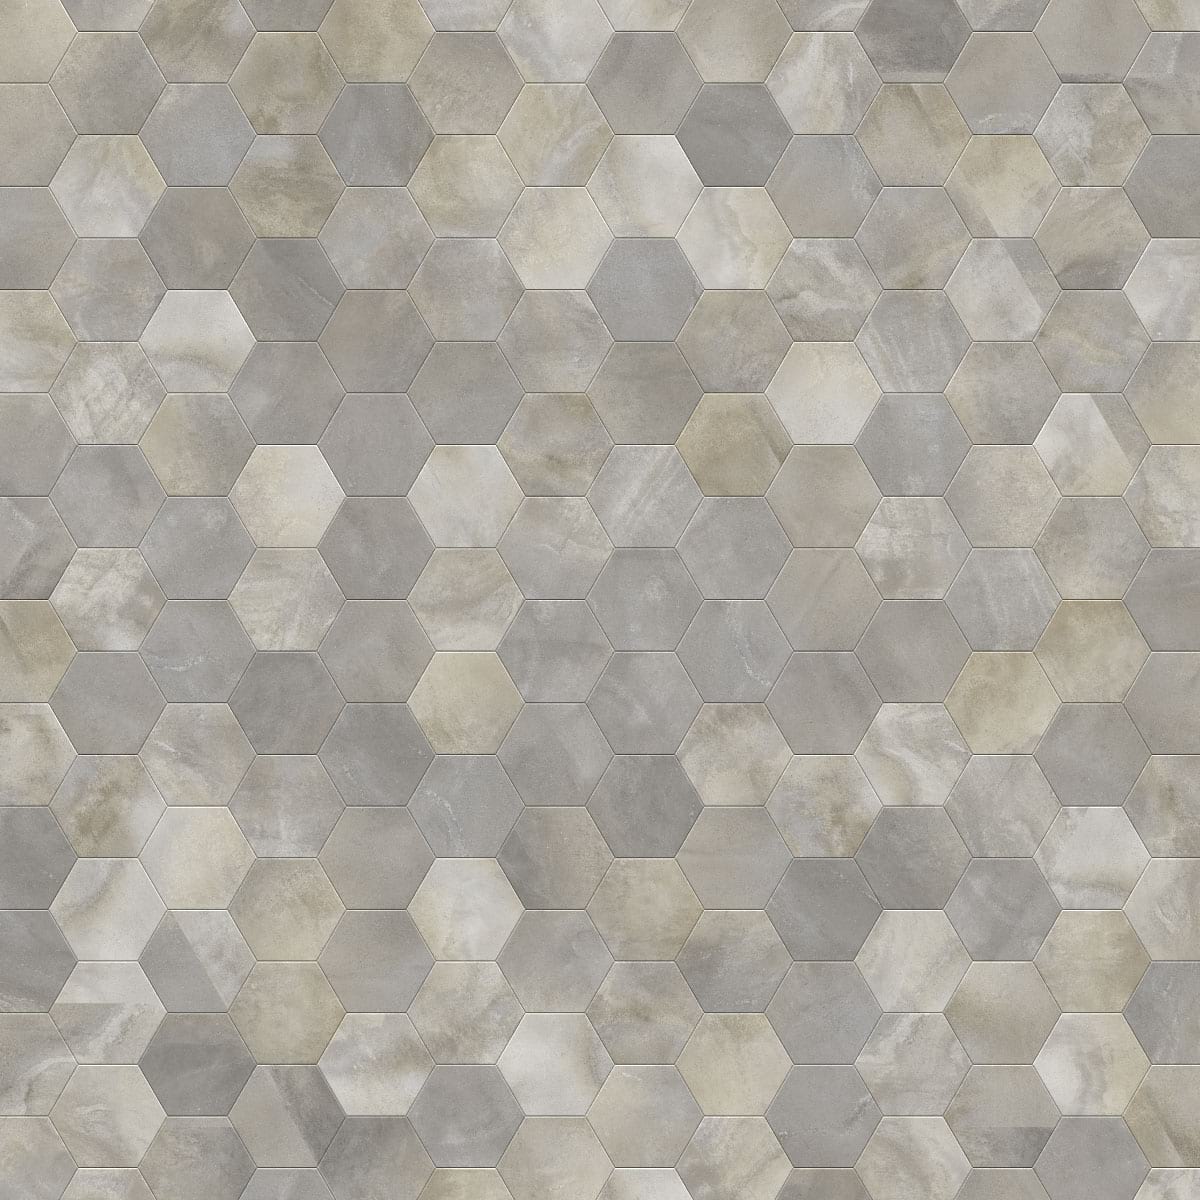 Виниловый пол Moduleo Moods Hexagon 319 от flatbox.by